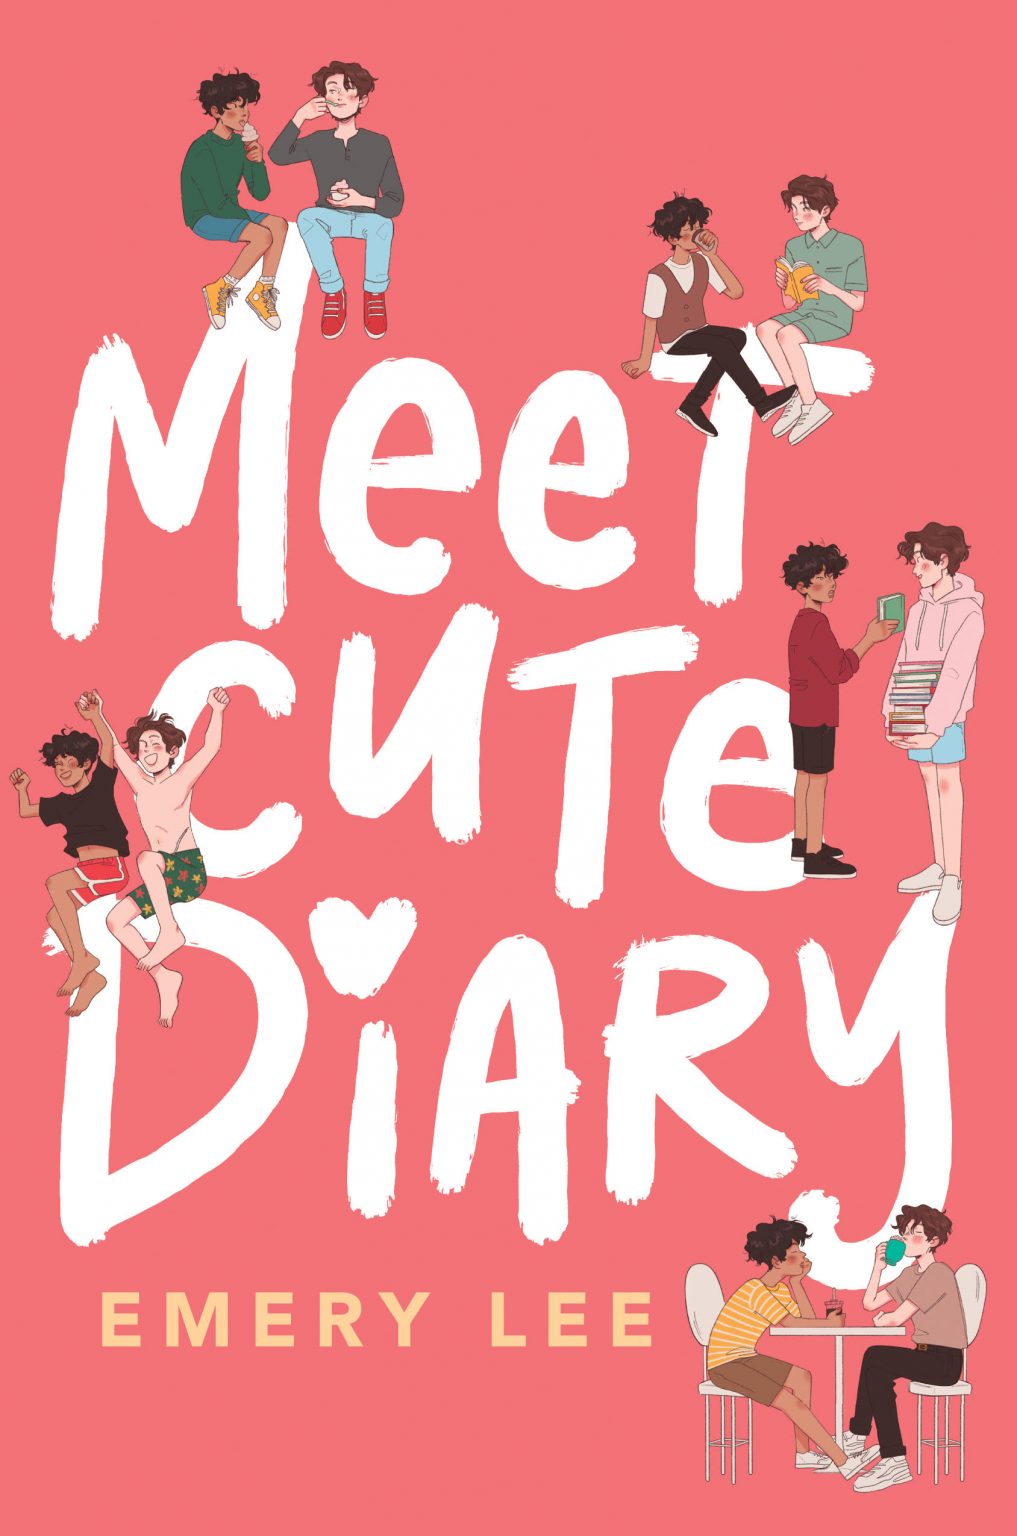 Meet Cute Diary libro